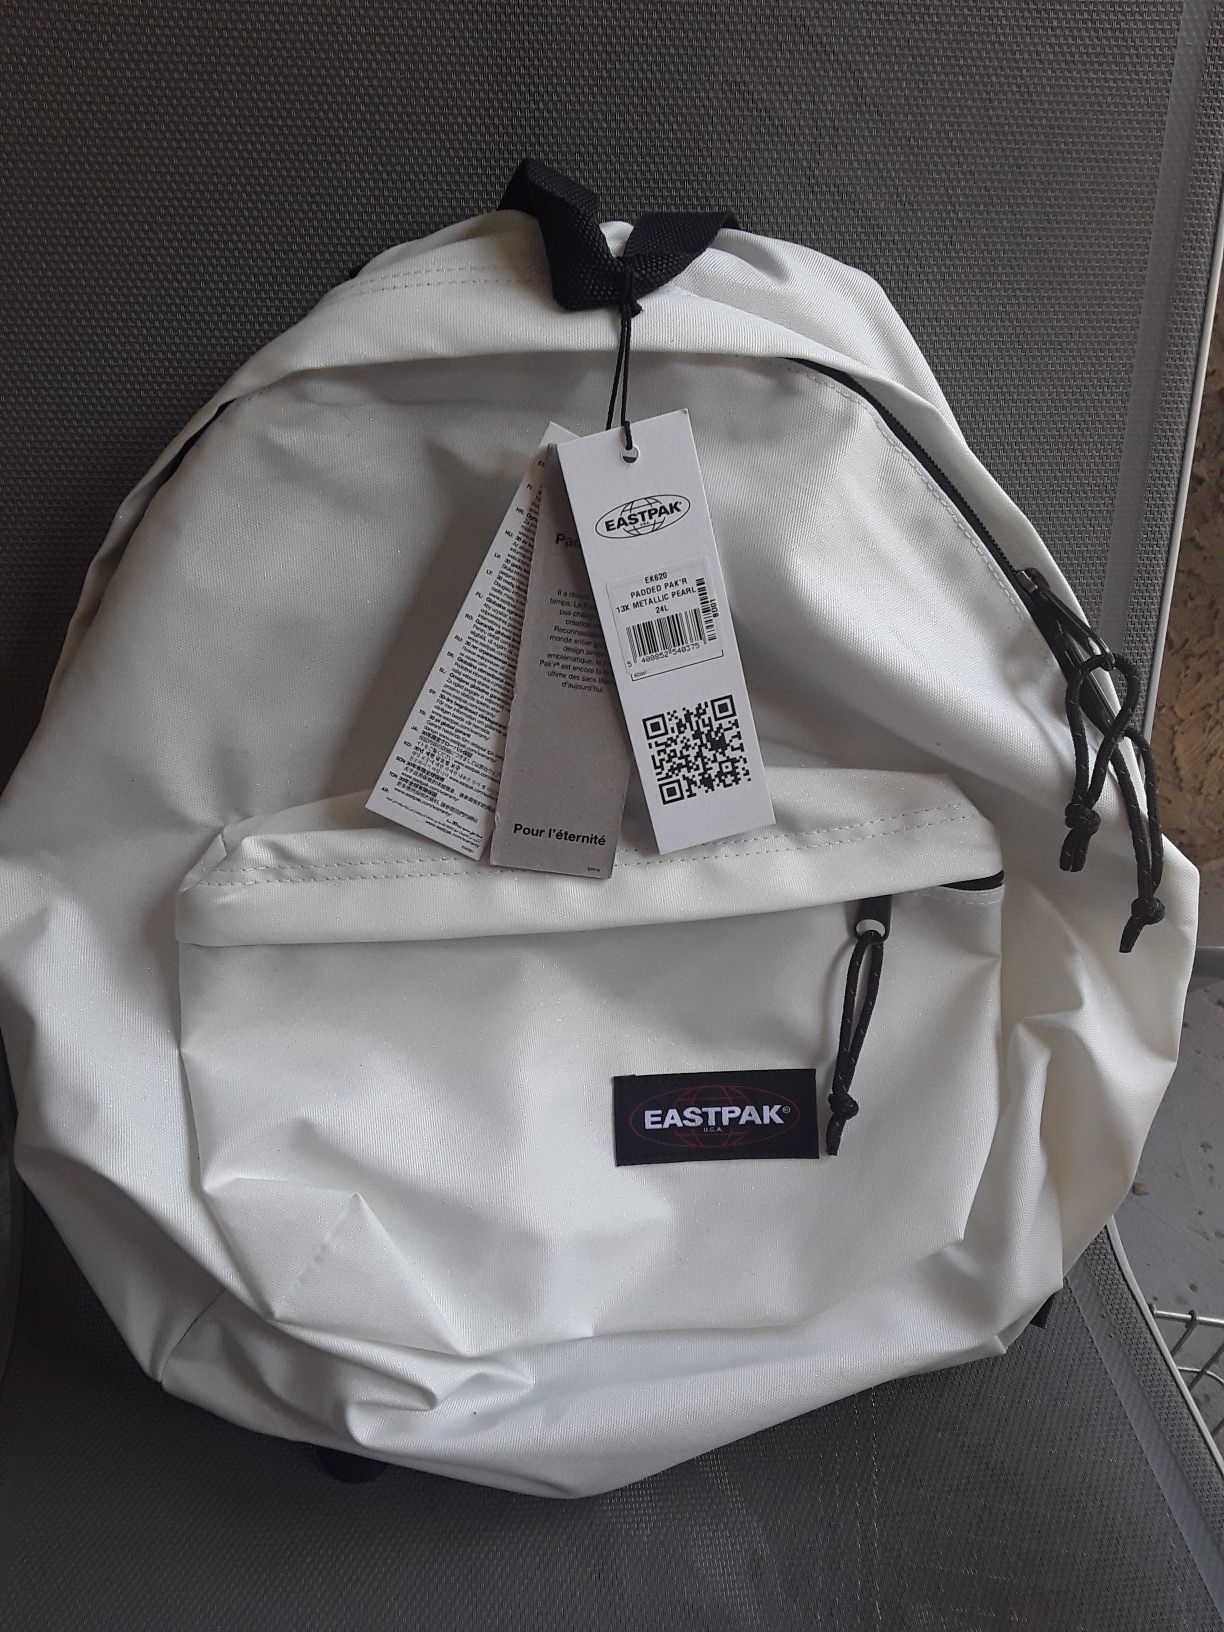 NEW Amazing Mettalic light Sparkle Eastpak Backpack Bag NWT Men Women Retail $50